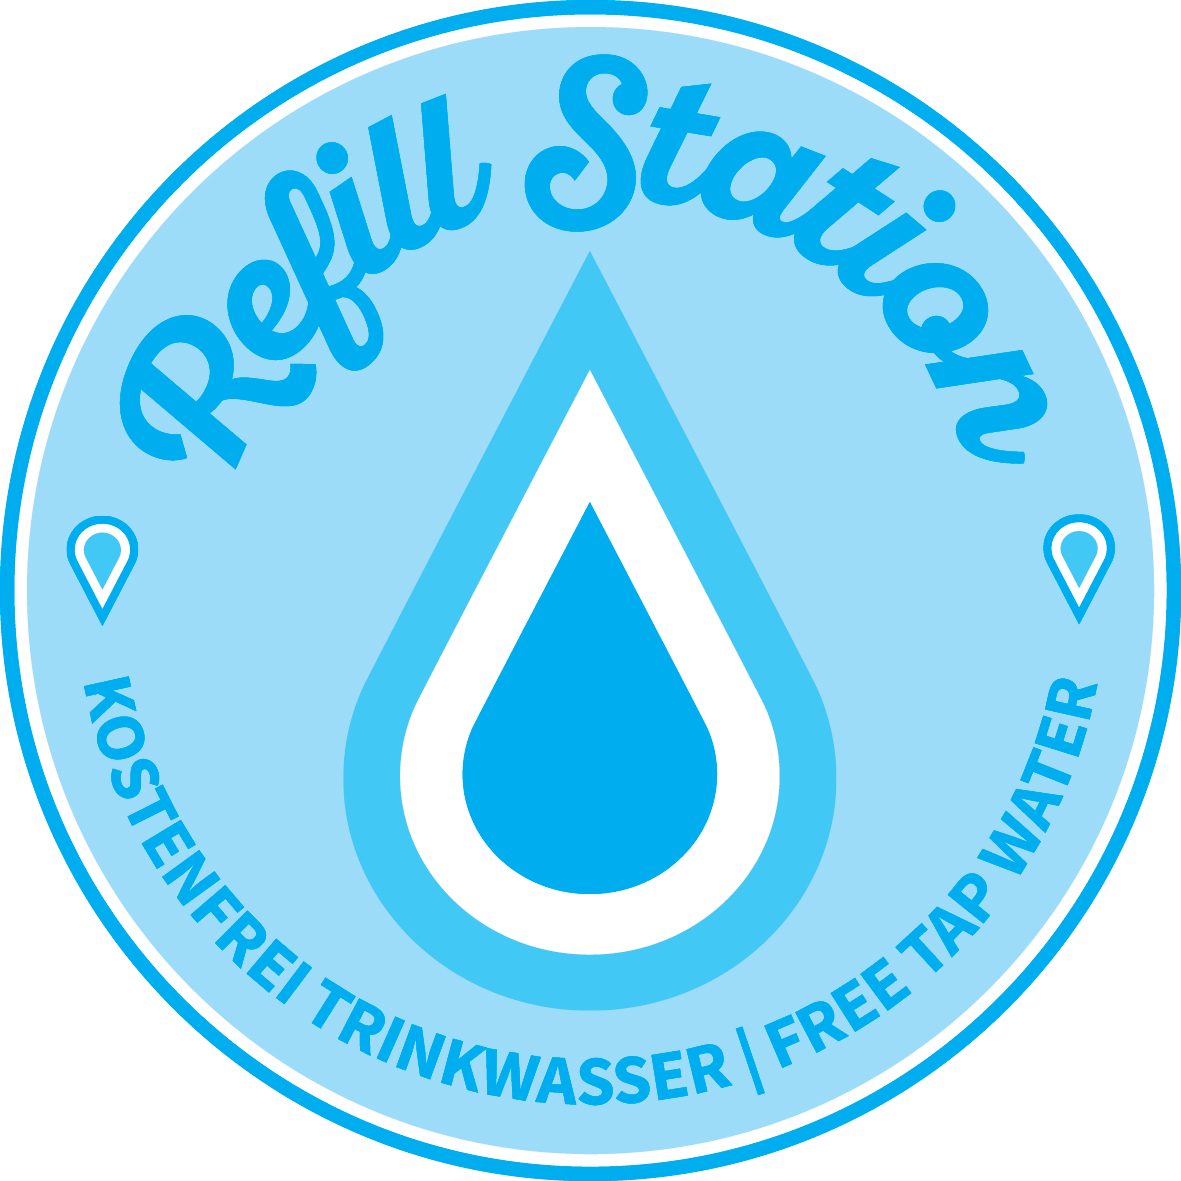 refill station logo download ausdrucken